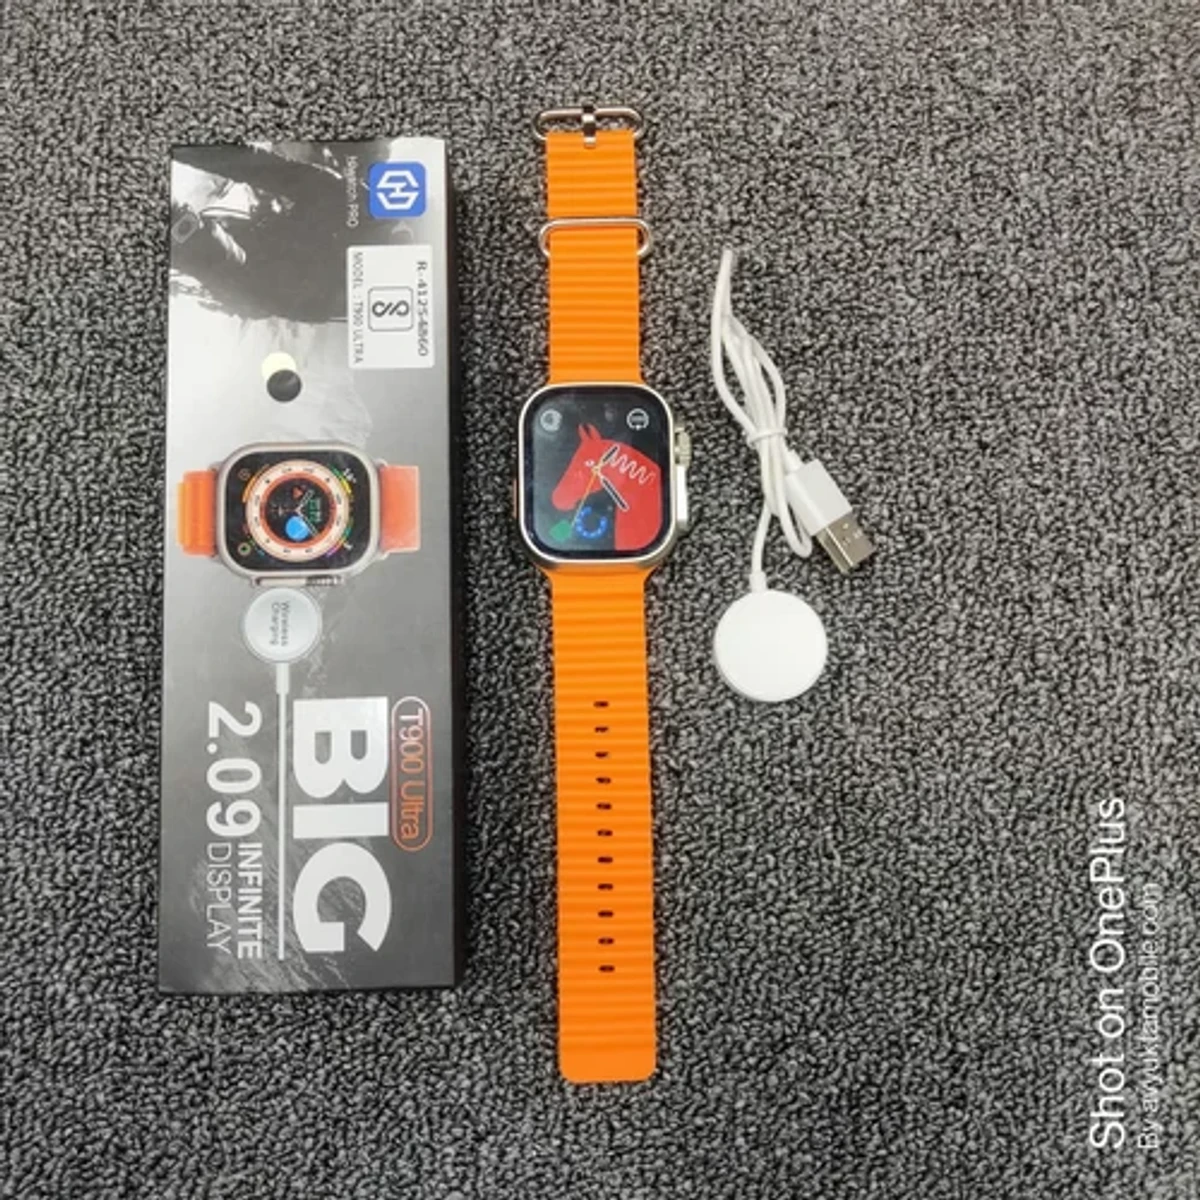 T900 Ultra Smart Watch(কমলা)(orange)